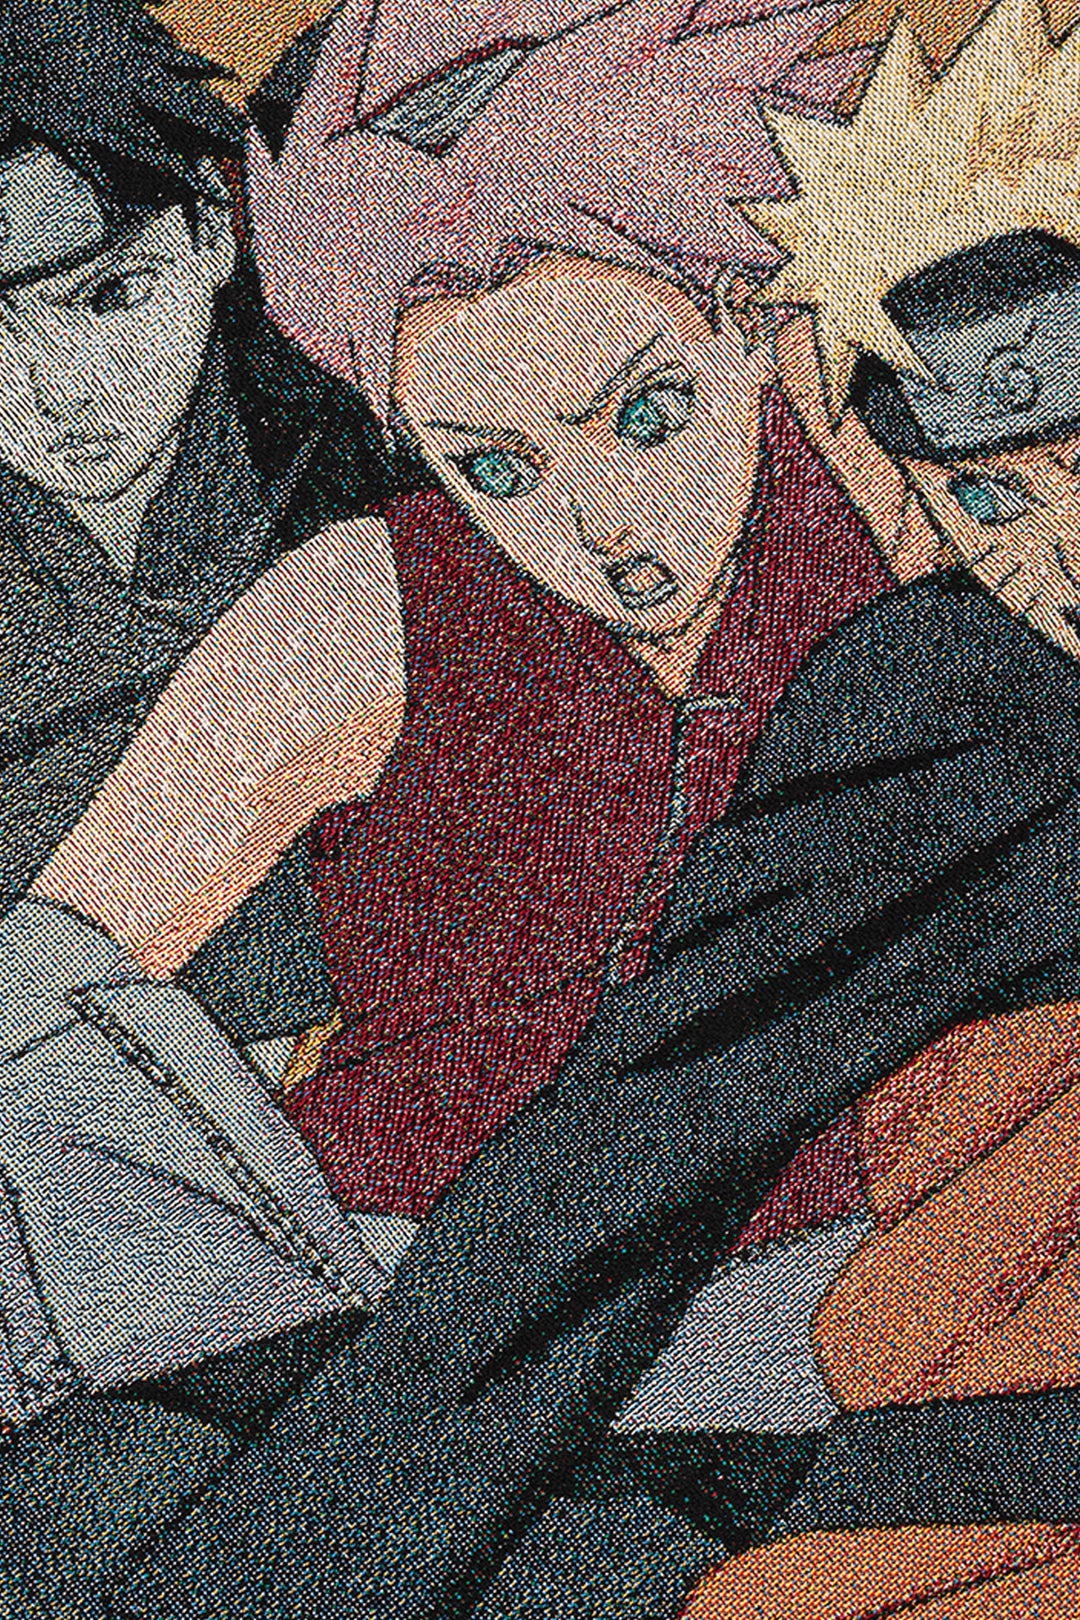 Naruto Action Tapestry Blanket - Multi